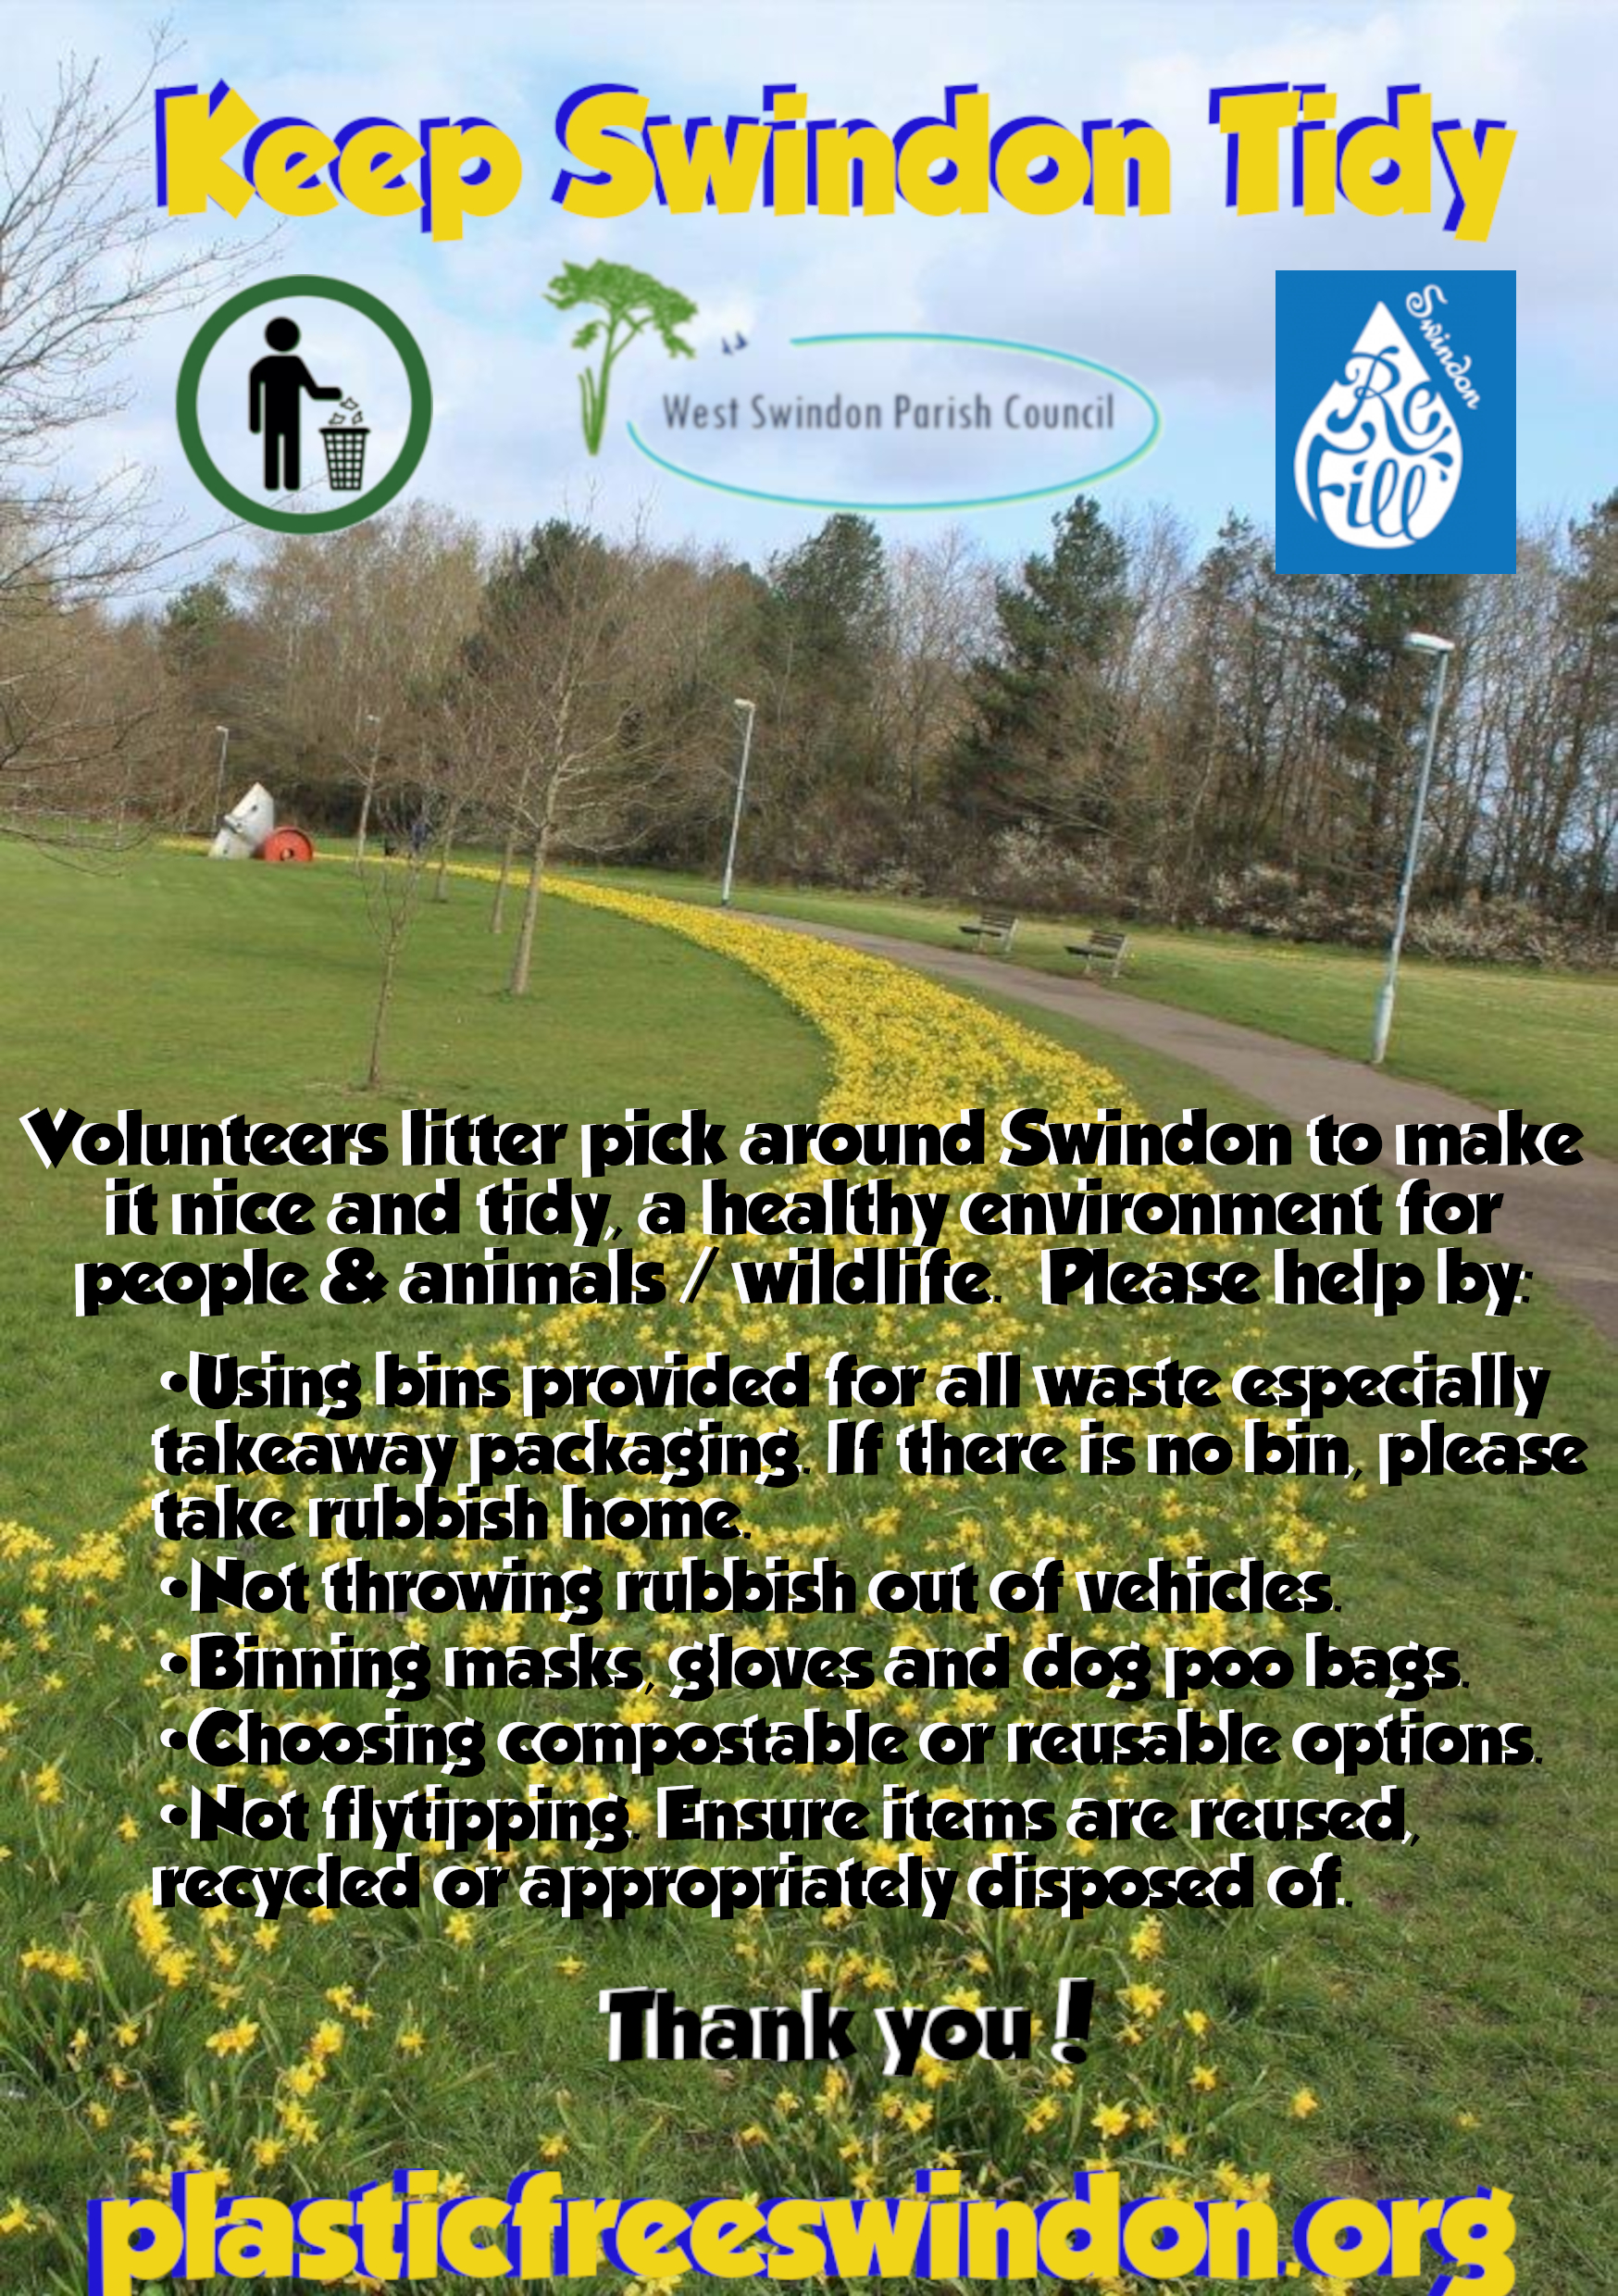 The Keep Swindon Tidy leaflet for west Swindon